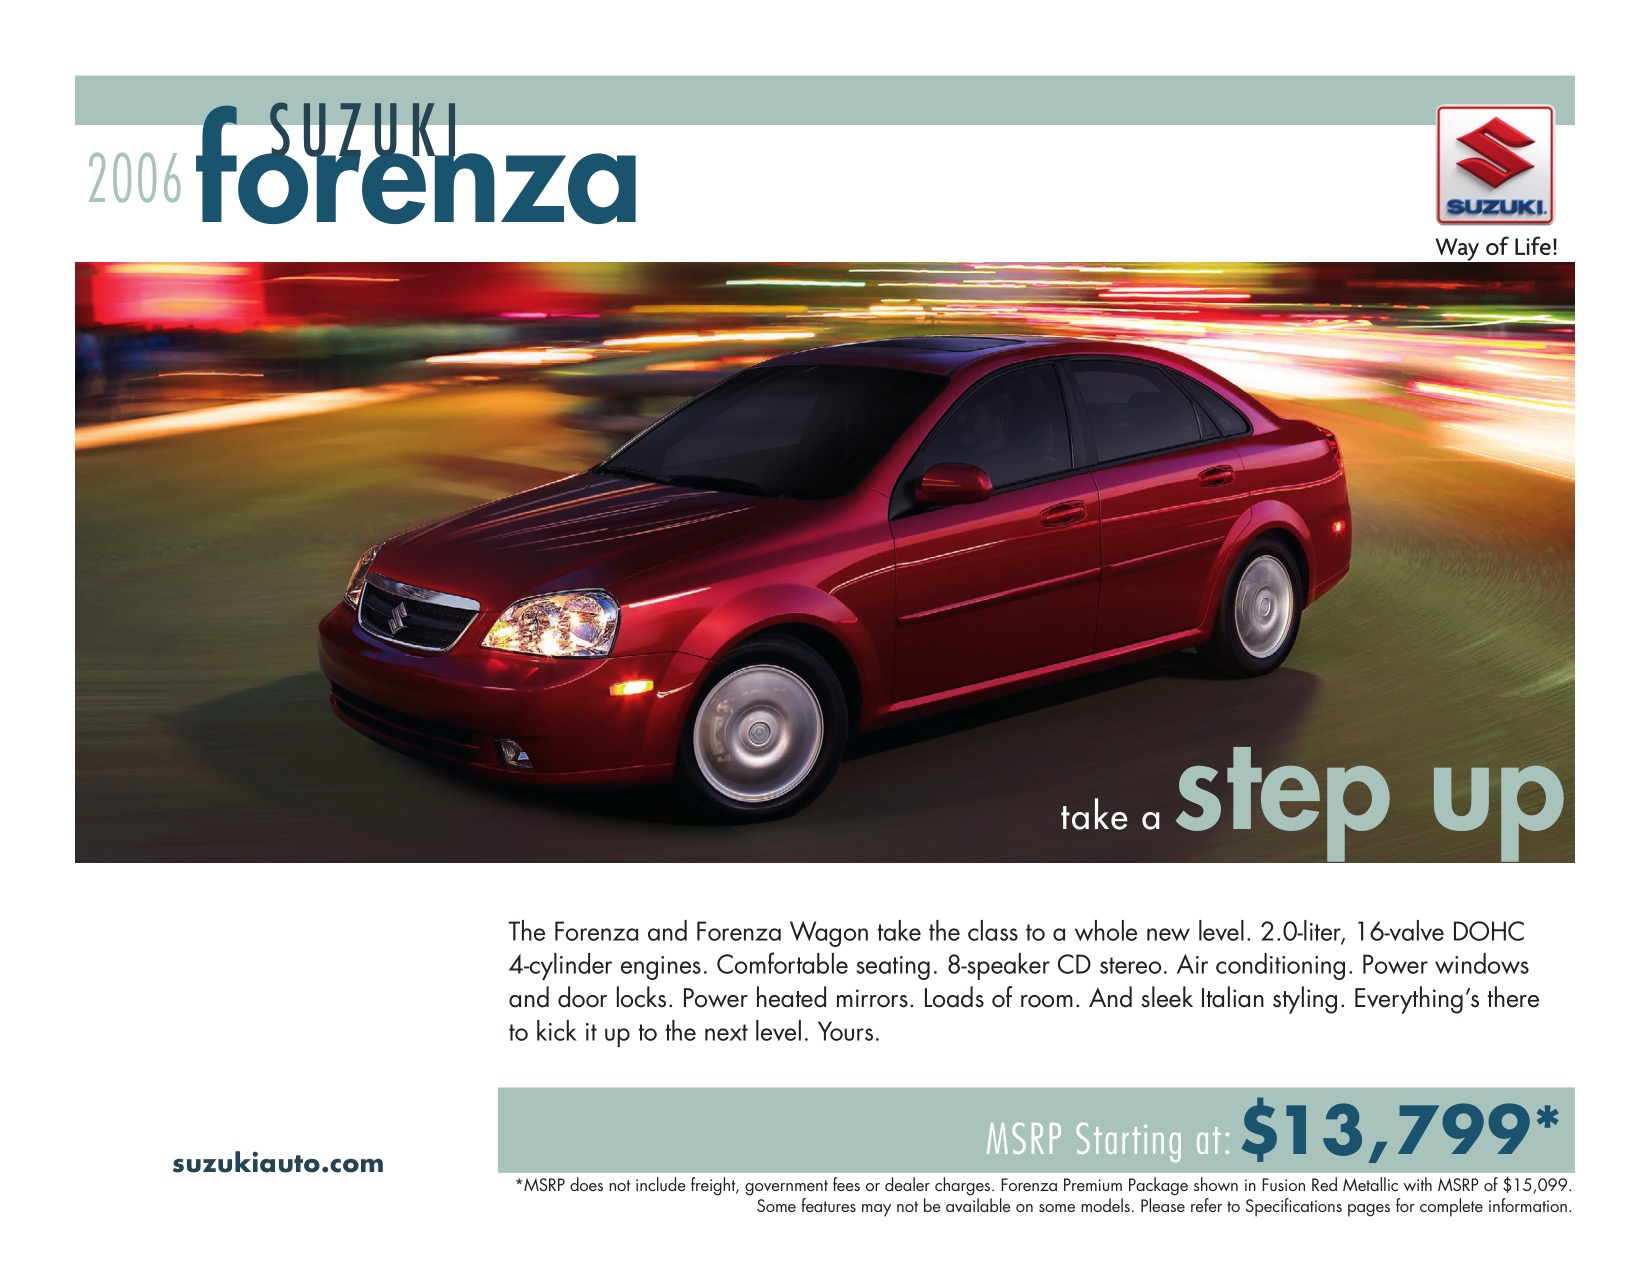 2006 Suzuki Forenza Brochure